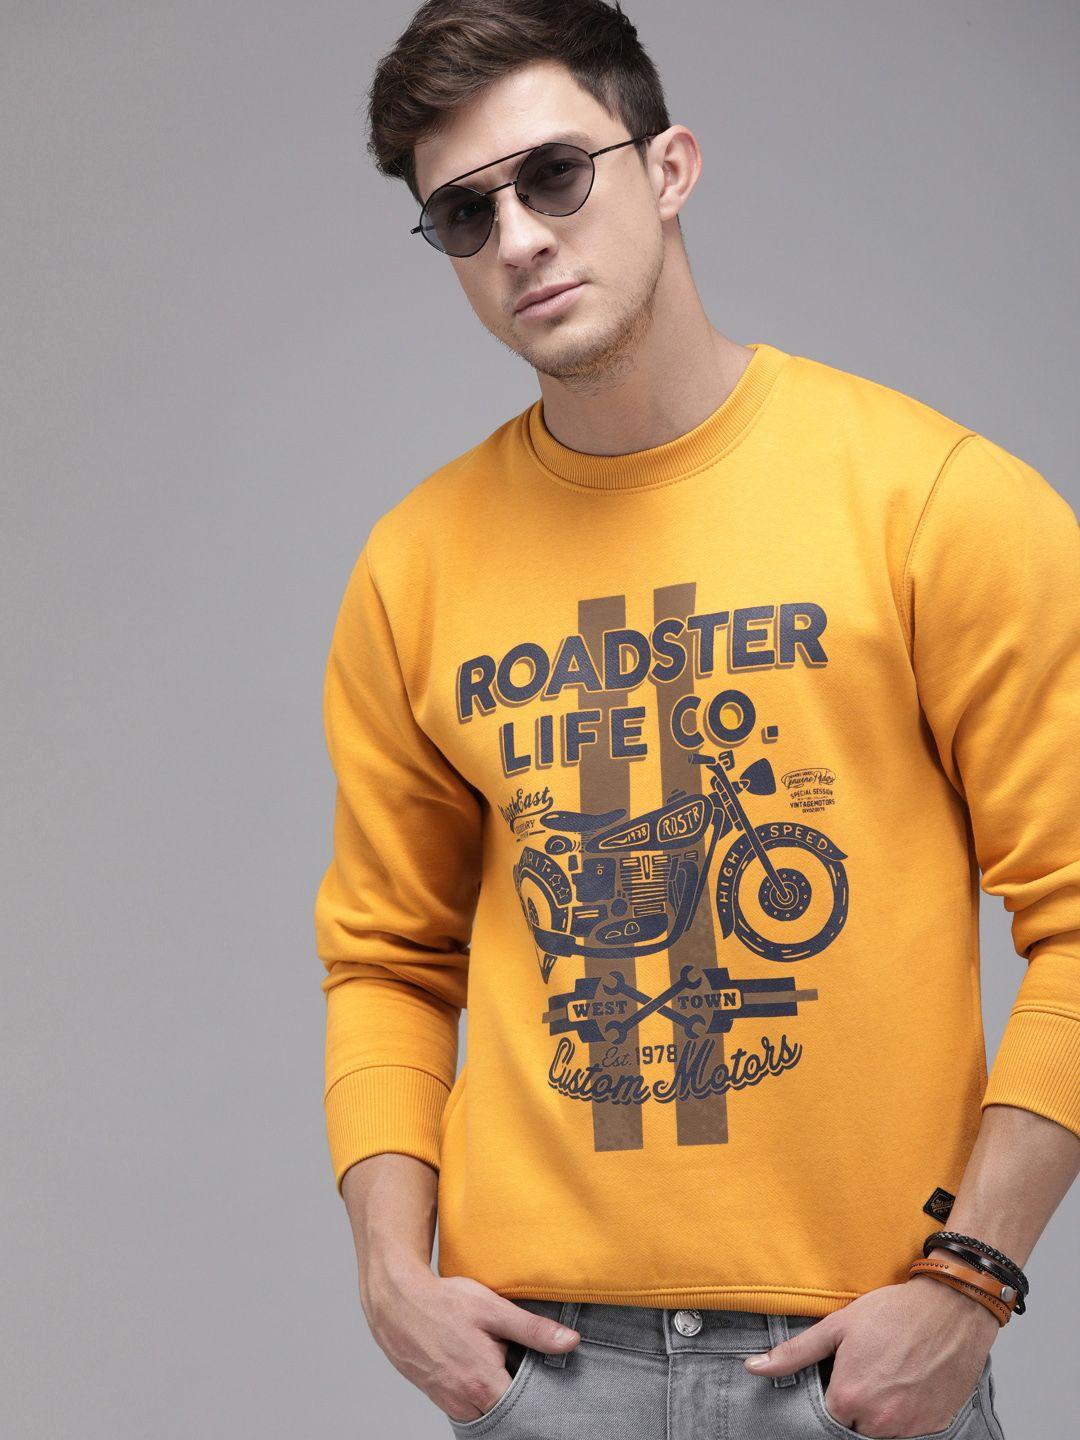 the roadster lifestyle co men mustard yellow printed sweatshirt